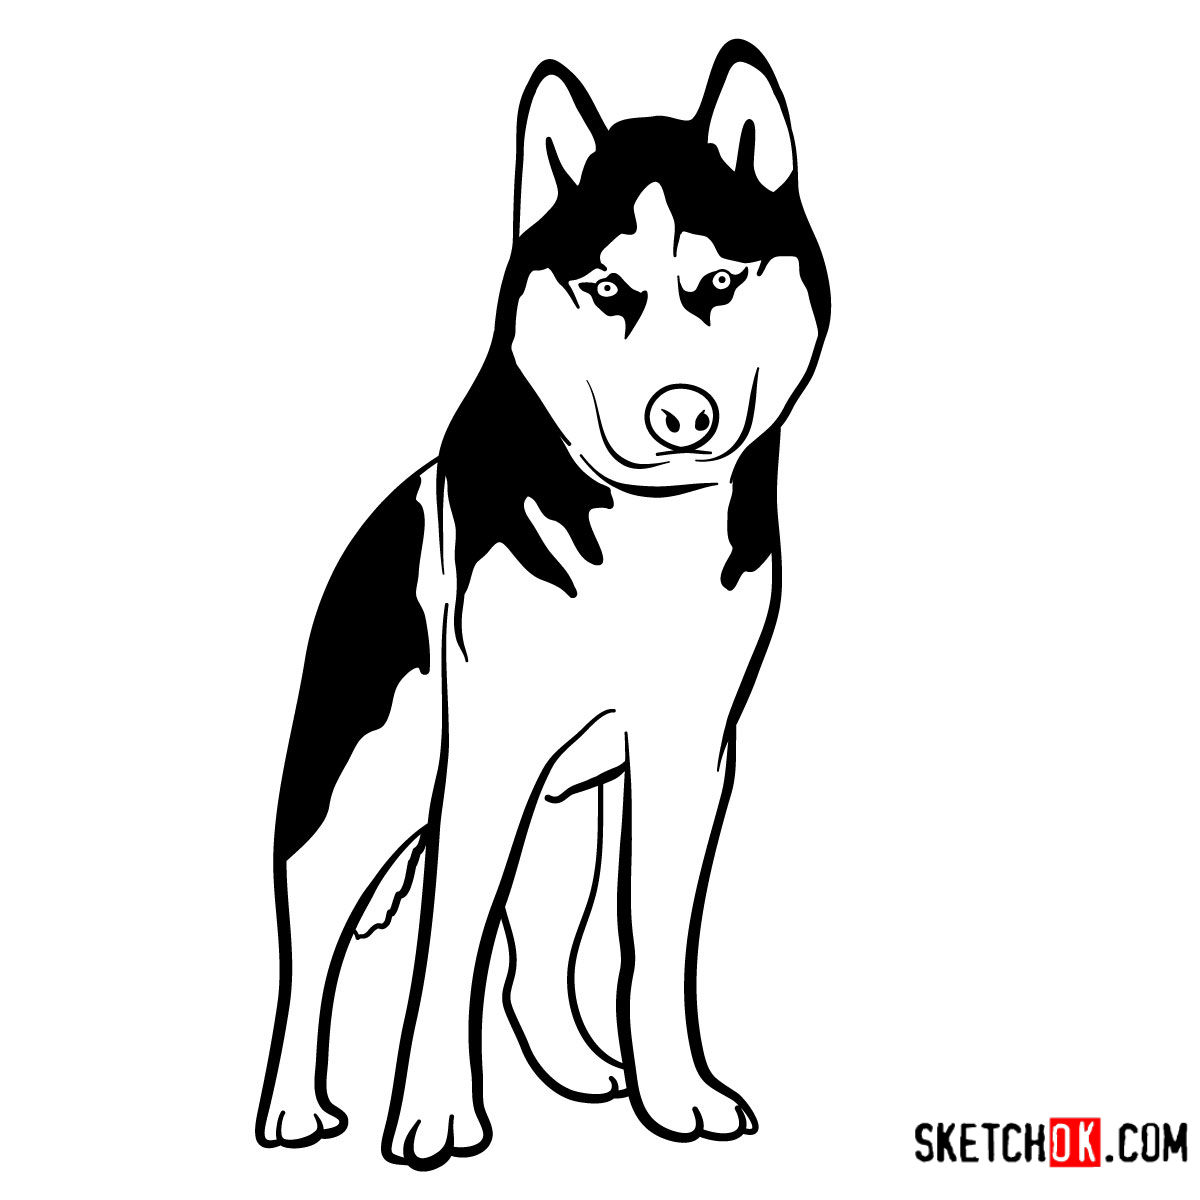 How to draw the Husky dog